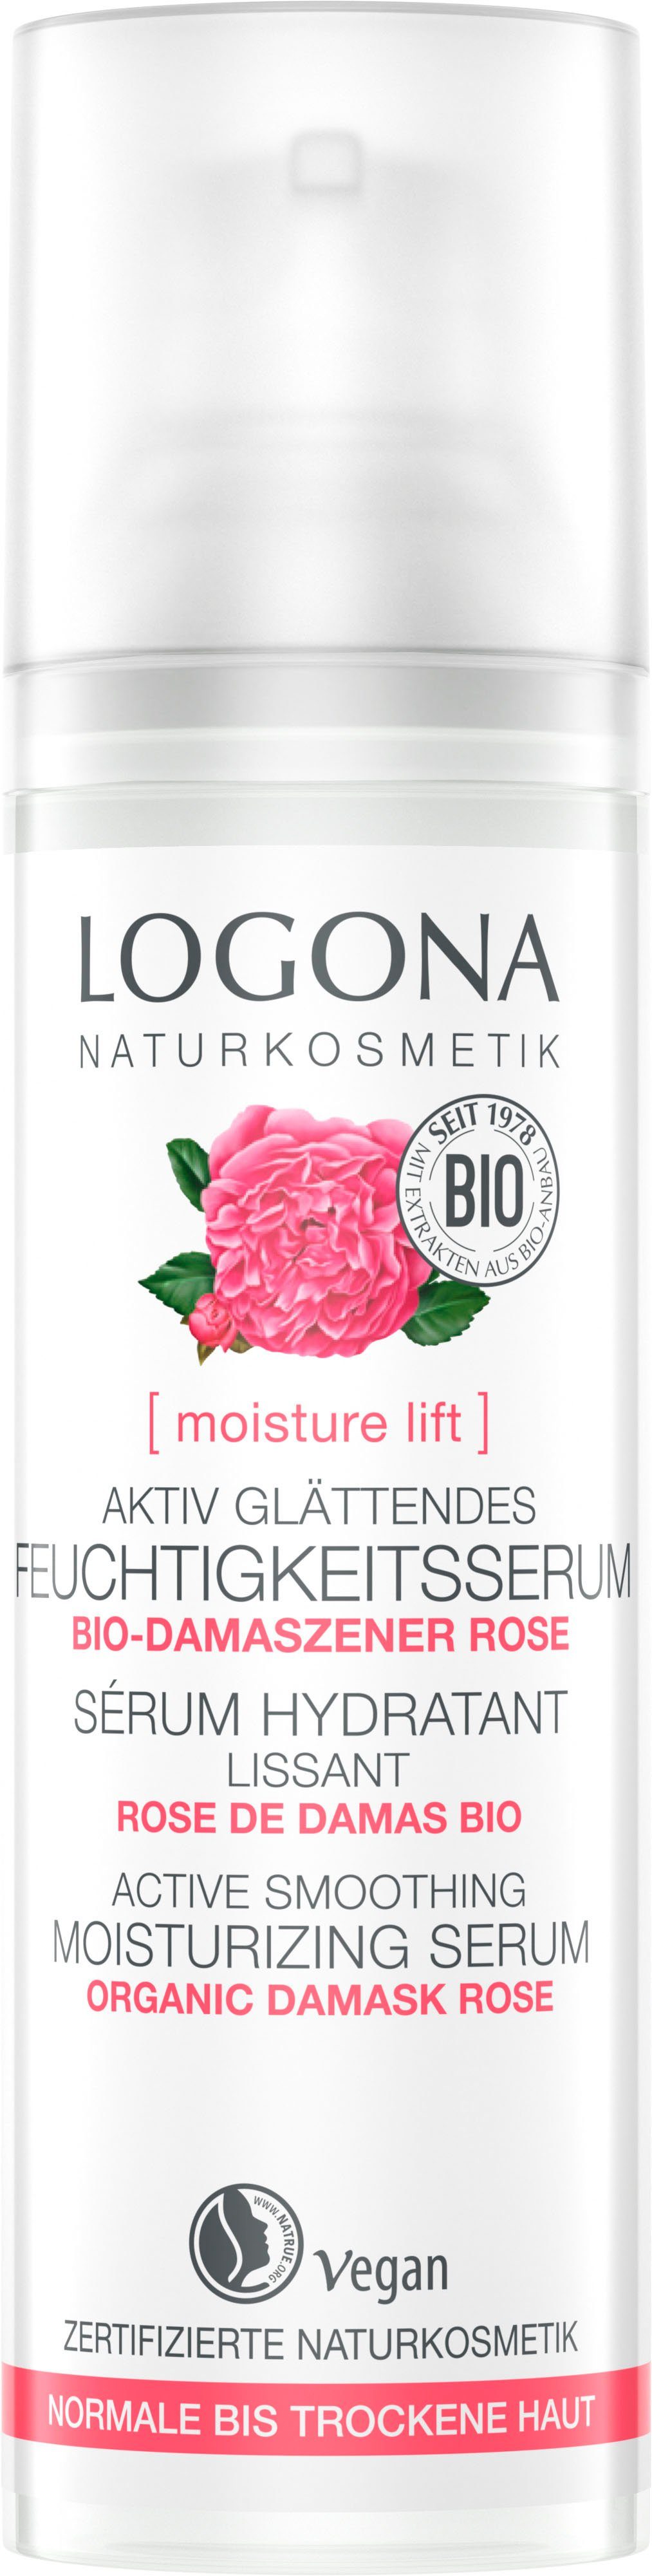 LOGONA Gesichtsserum Logona glätt Feuchtigk.serum lift moisture